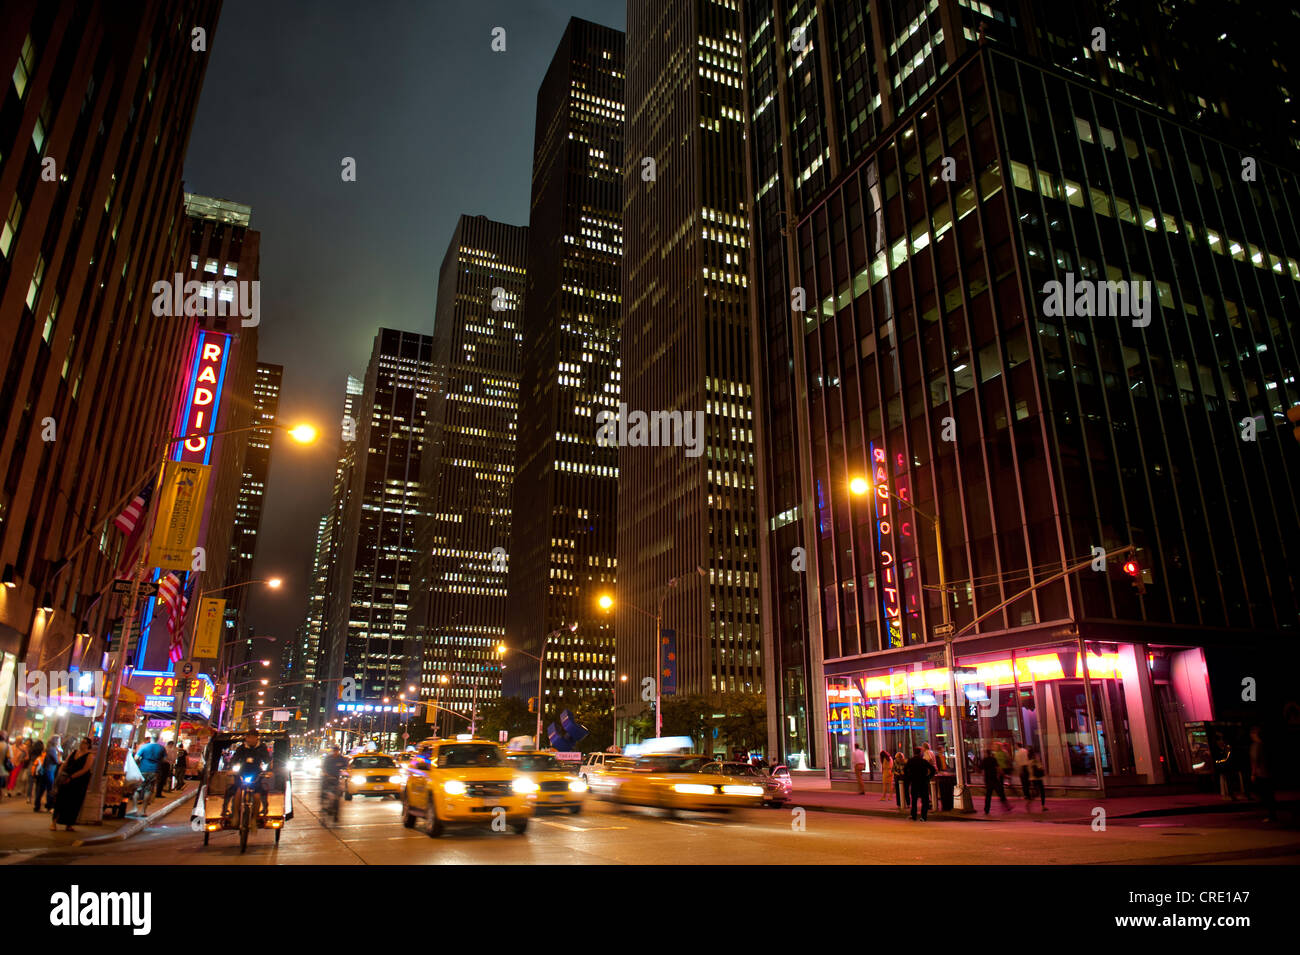 Illuminated skyscrapers and traffic at night, 6th Avenue corner of 51st West, Midtown, Manhattan, New York City, USA Stock Photo